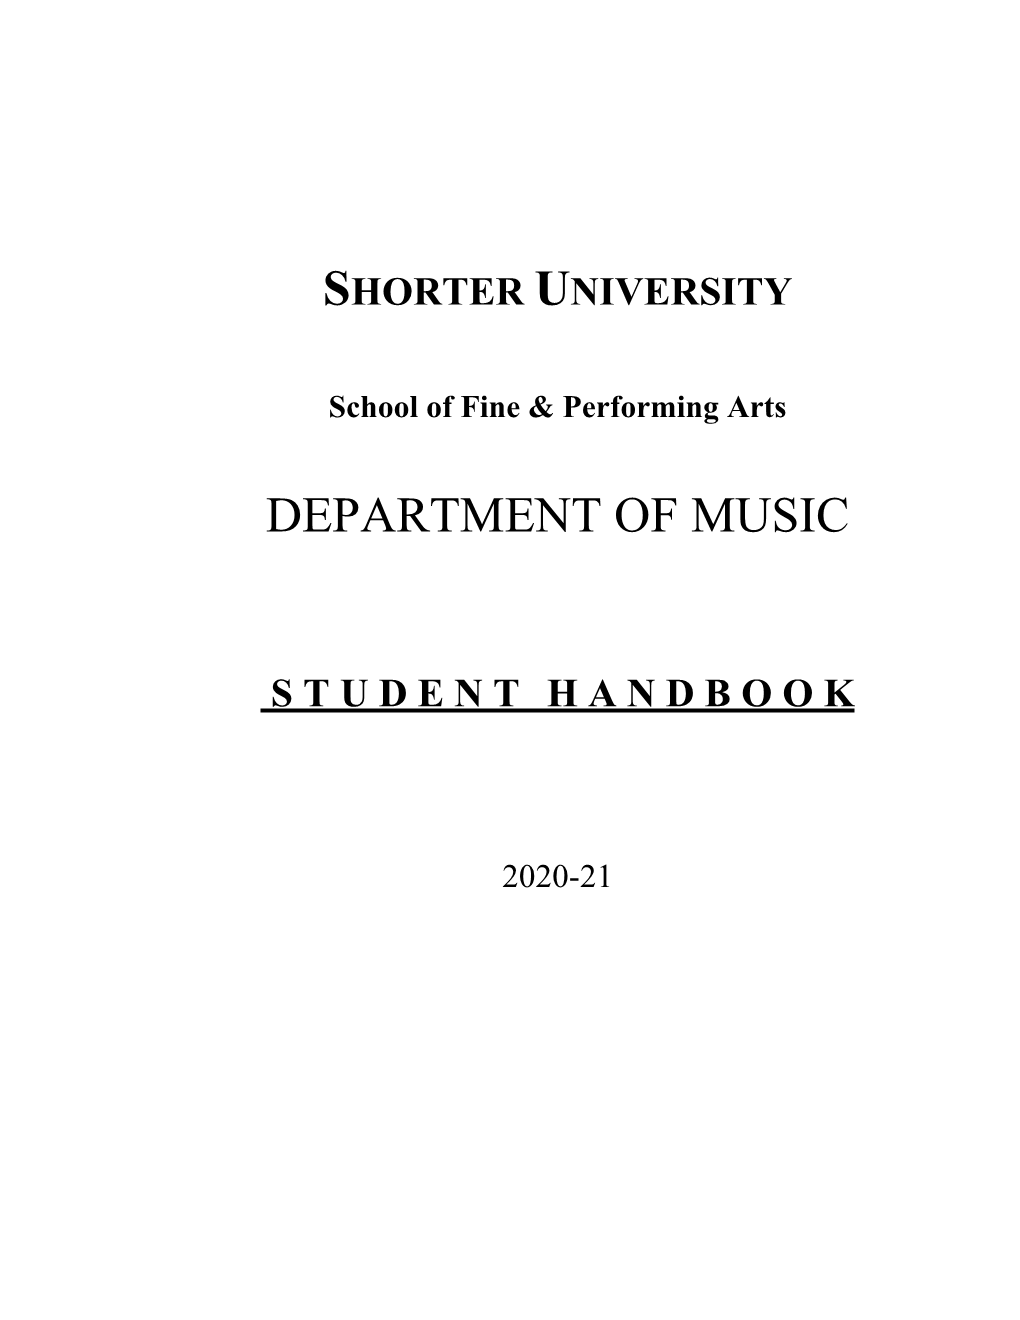 Music Student Handbook 2020-21